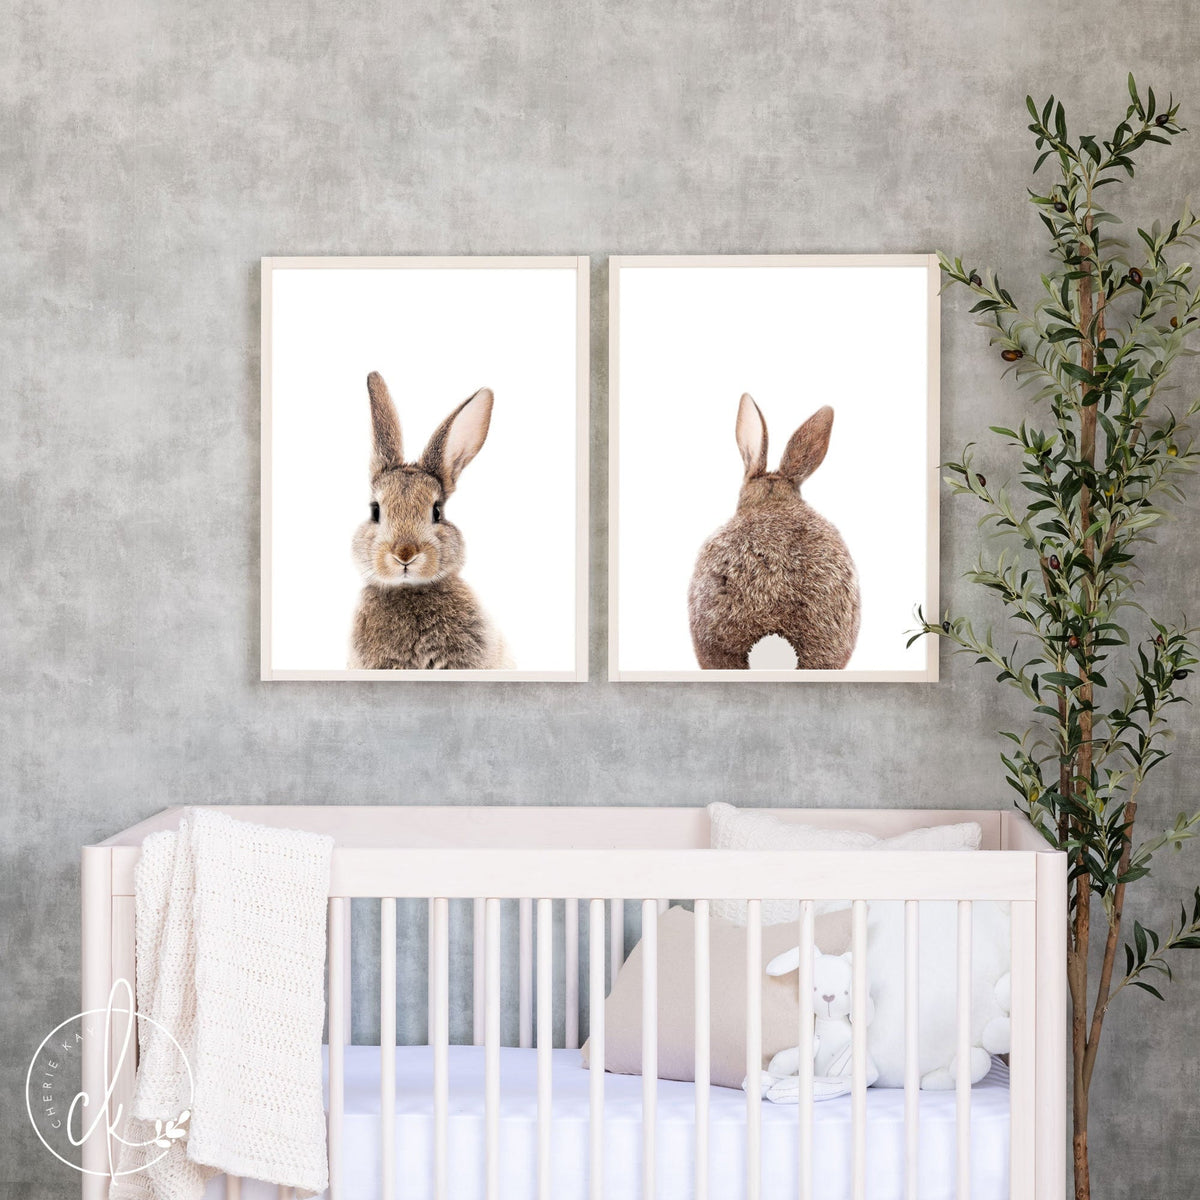 Bunny Nursery Framed Wall Art | Nursery Wall Decor | Wall Decor For Above Crib | Woodland Nursery | Baby Shower Gift